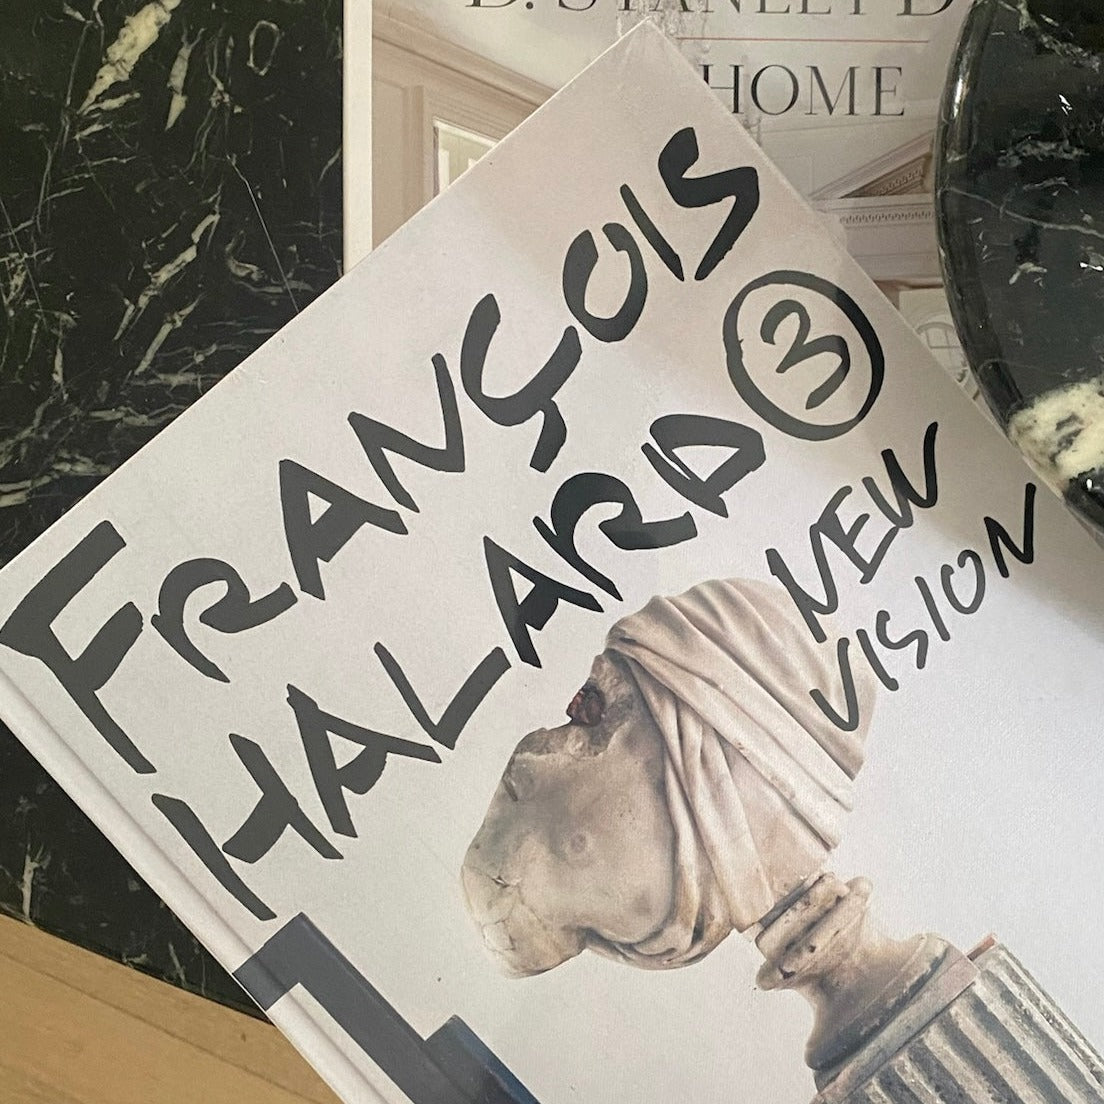 Francois halard new vision book